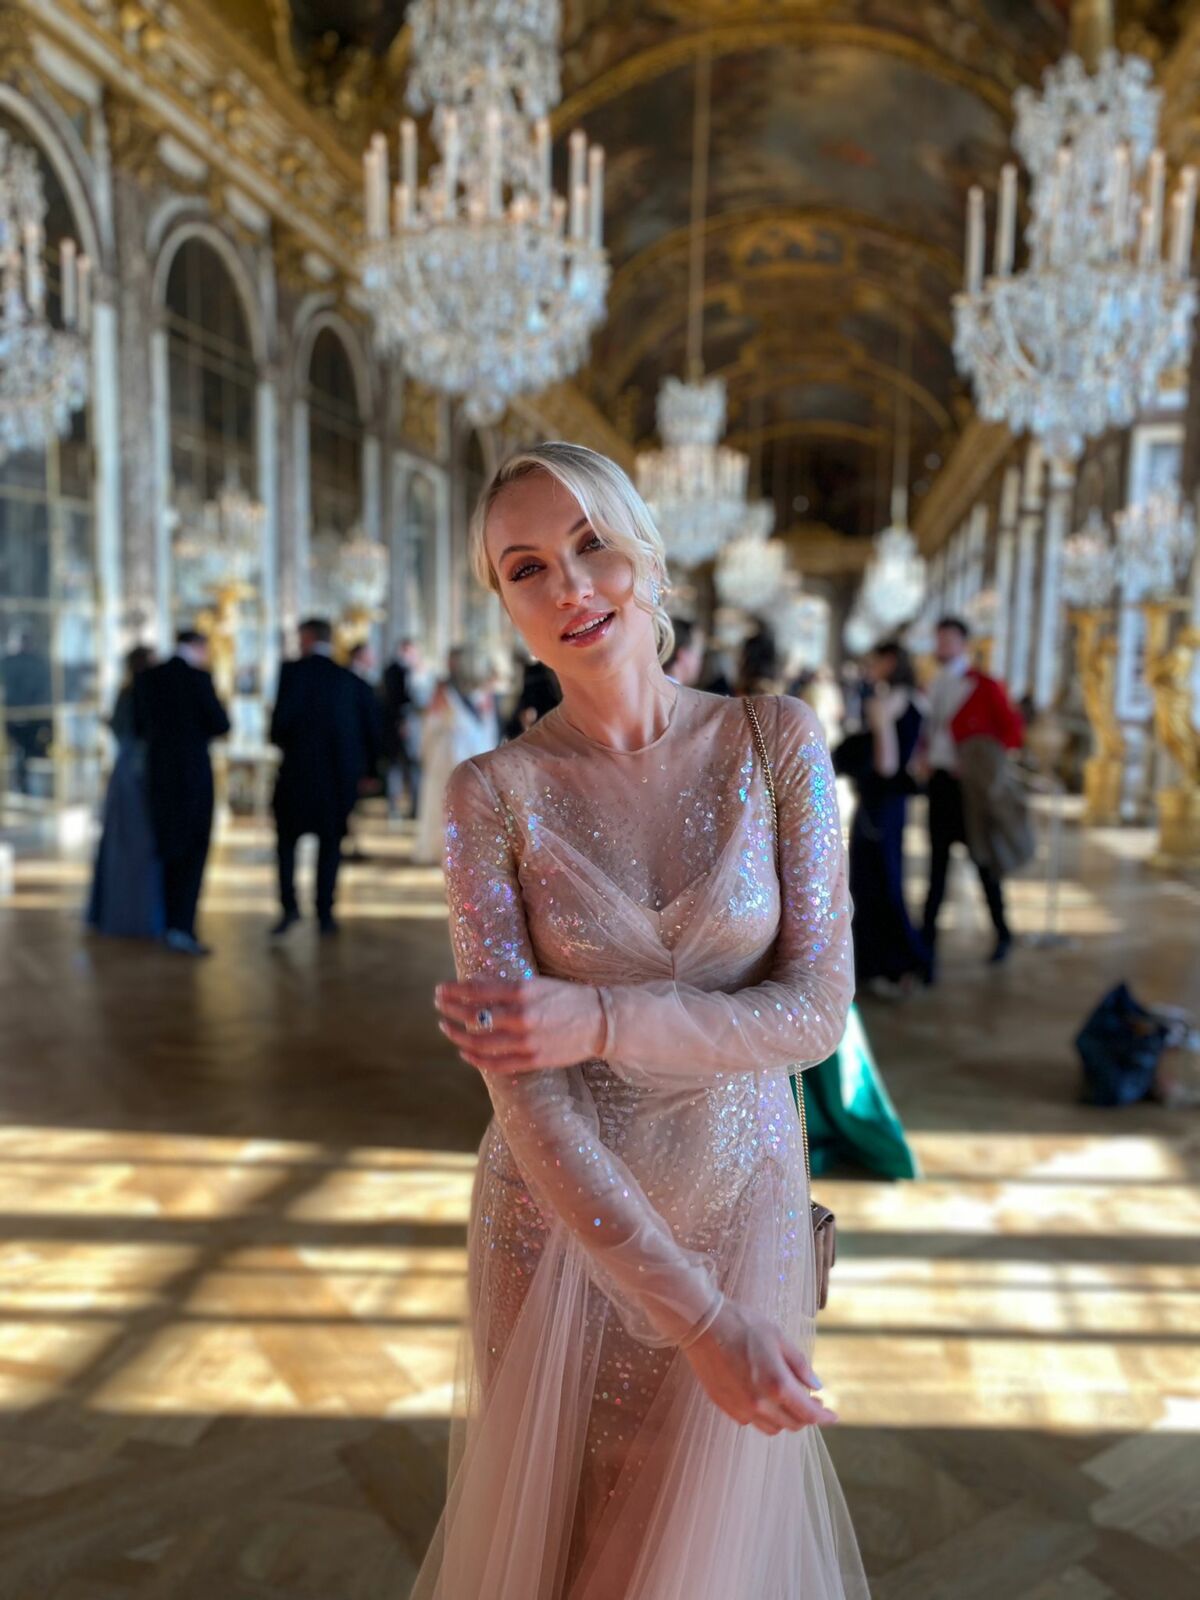 Michaela Tomanova in Julien Fournié for a ball at the Château de Versailles